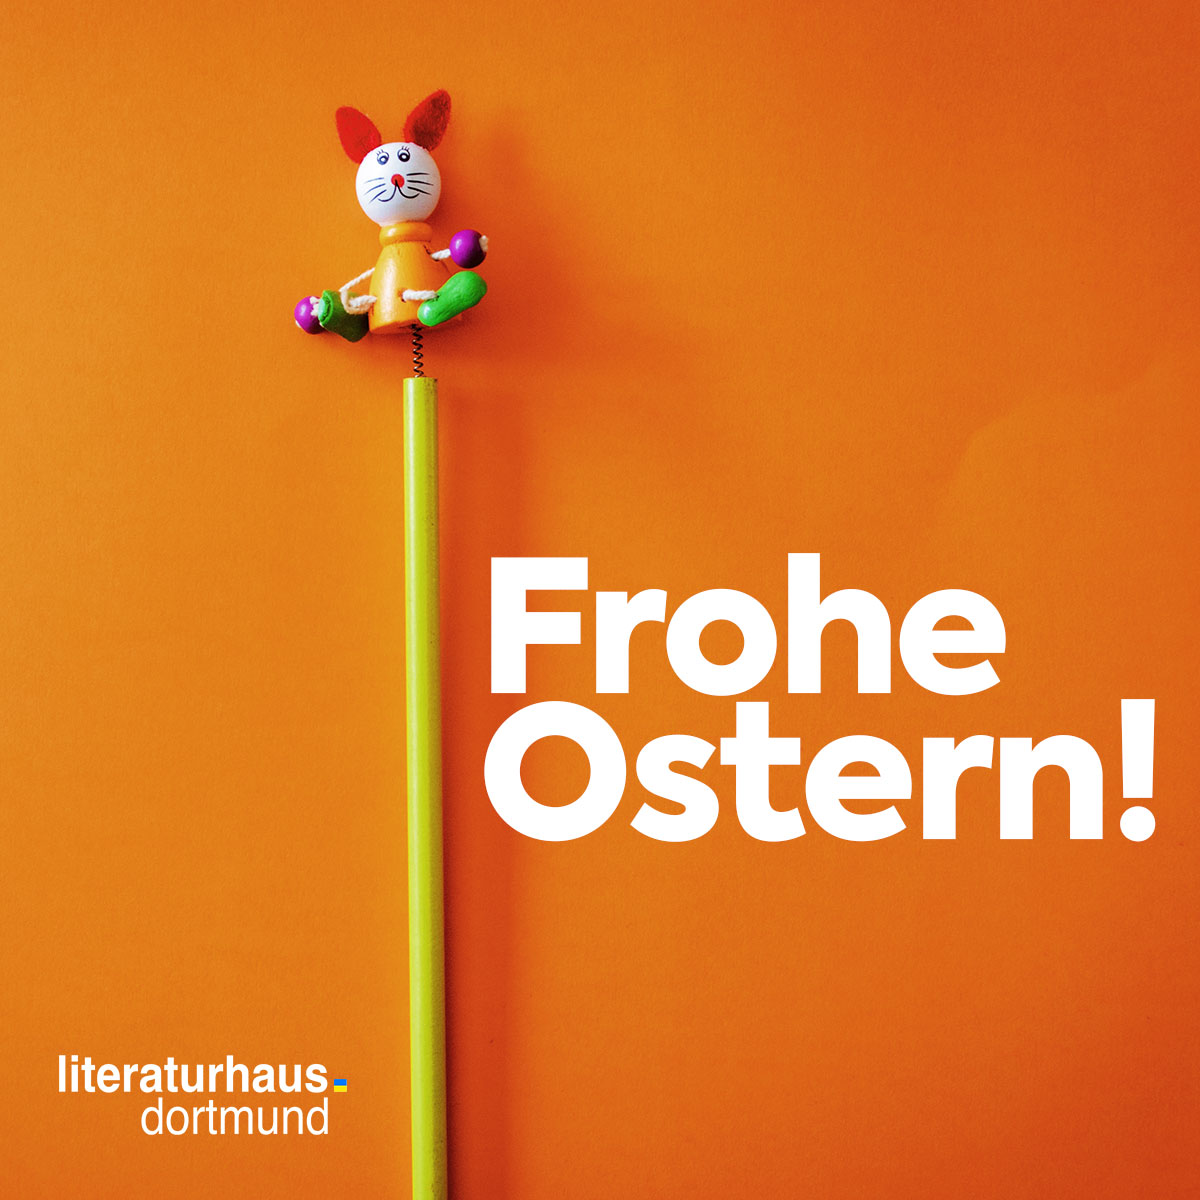 Featured image for “Frohe und friedliche Ostern 2022”